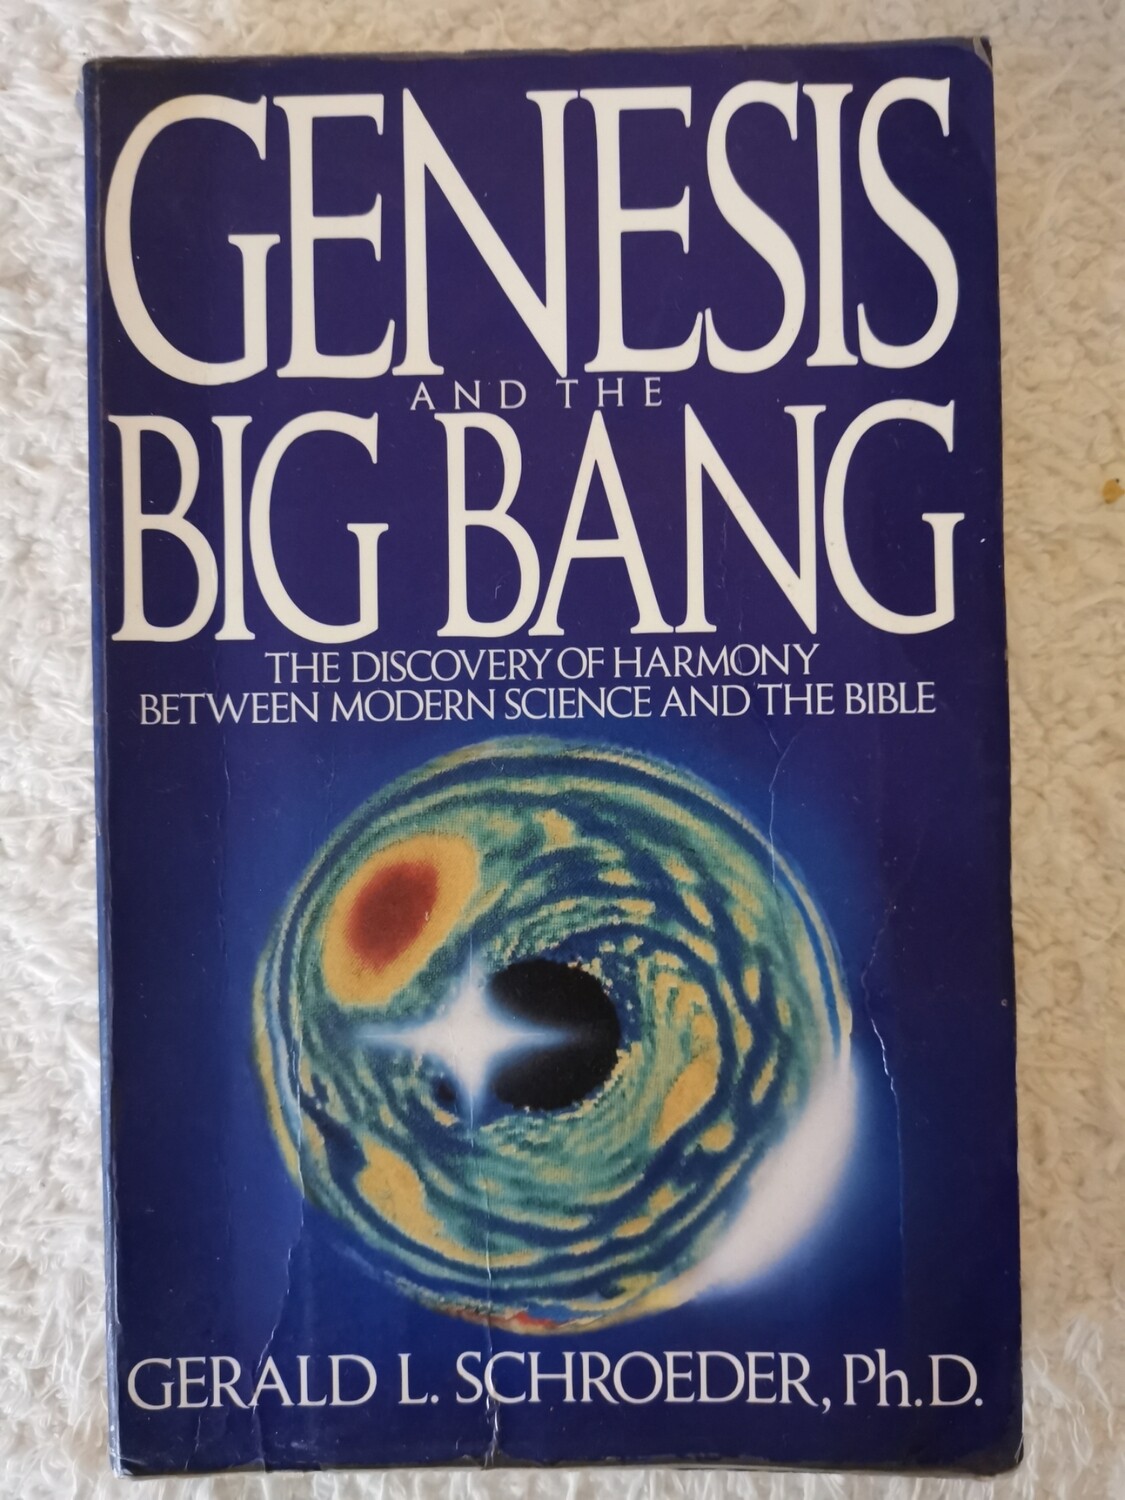 Genesis and the big bang, Gerald L. Schroeder